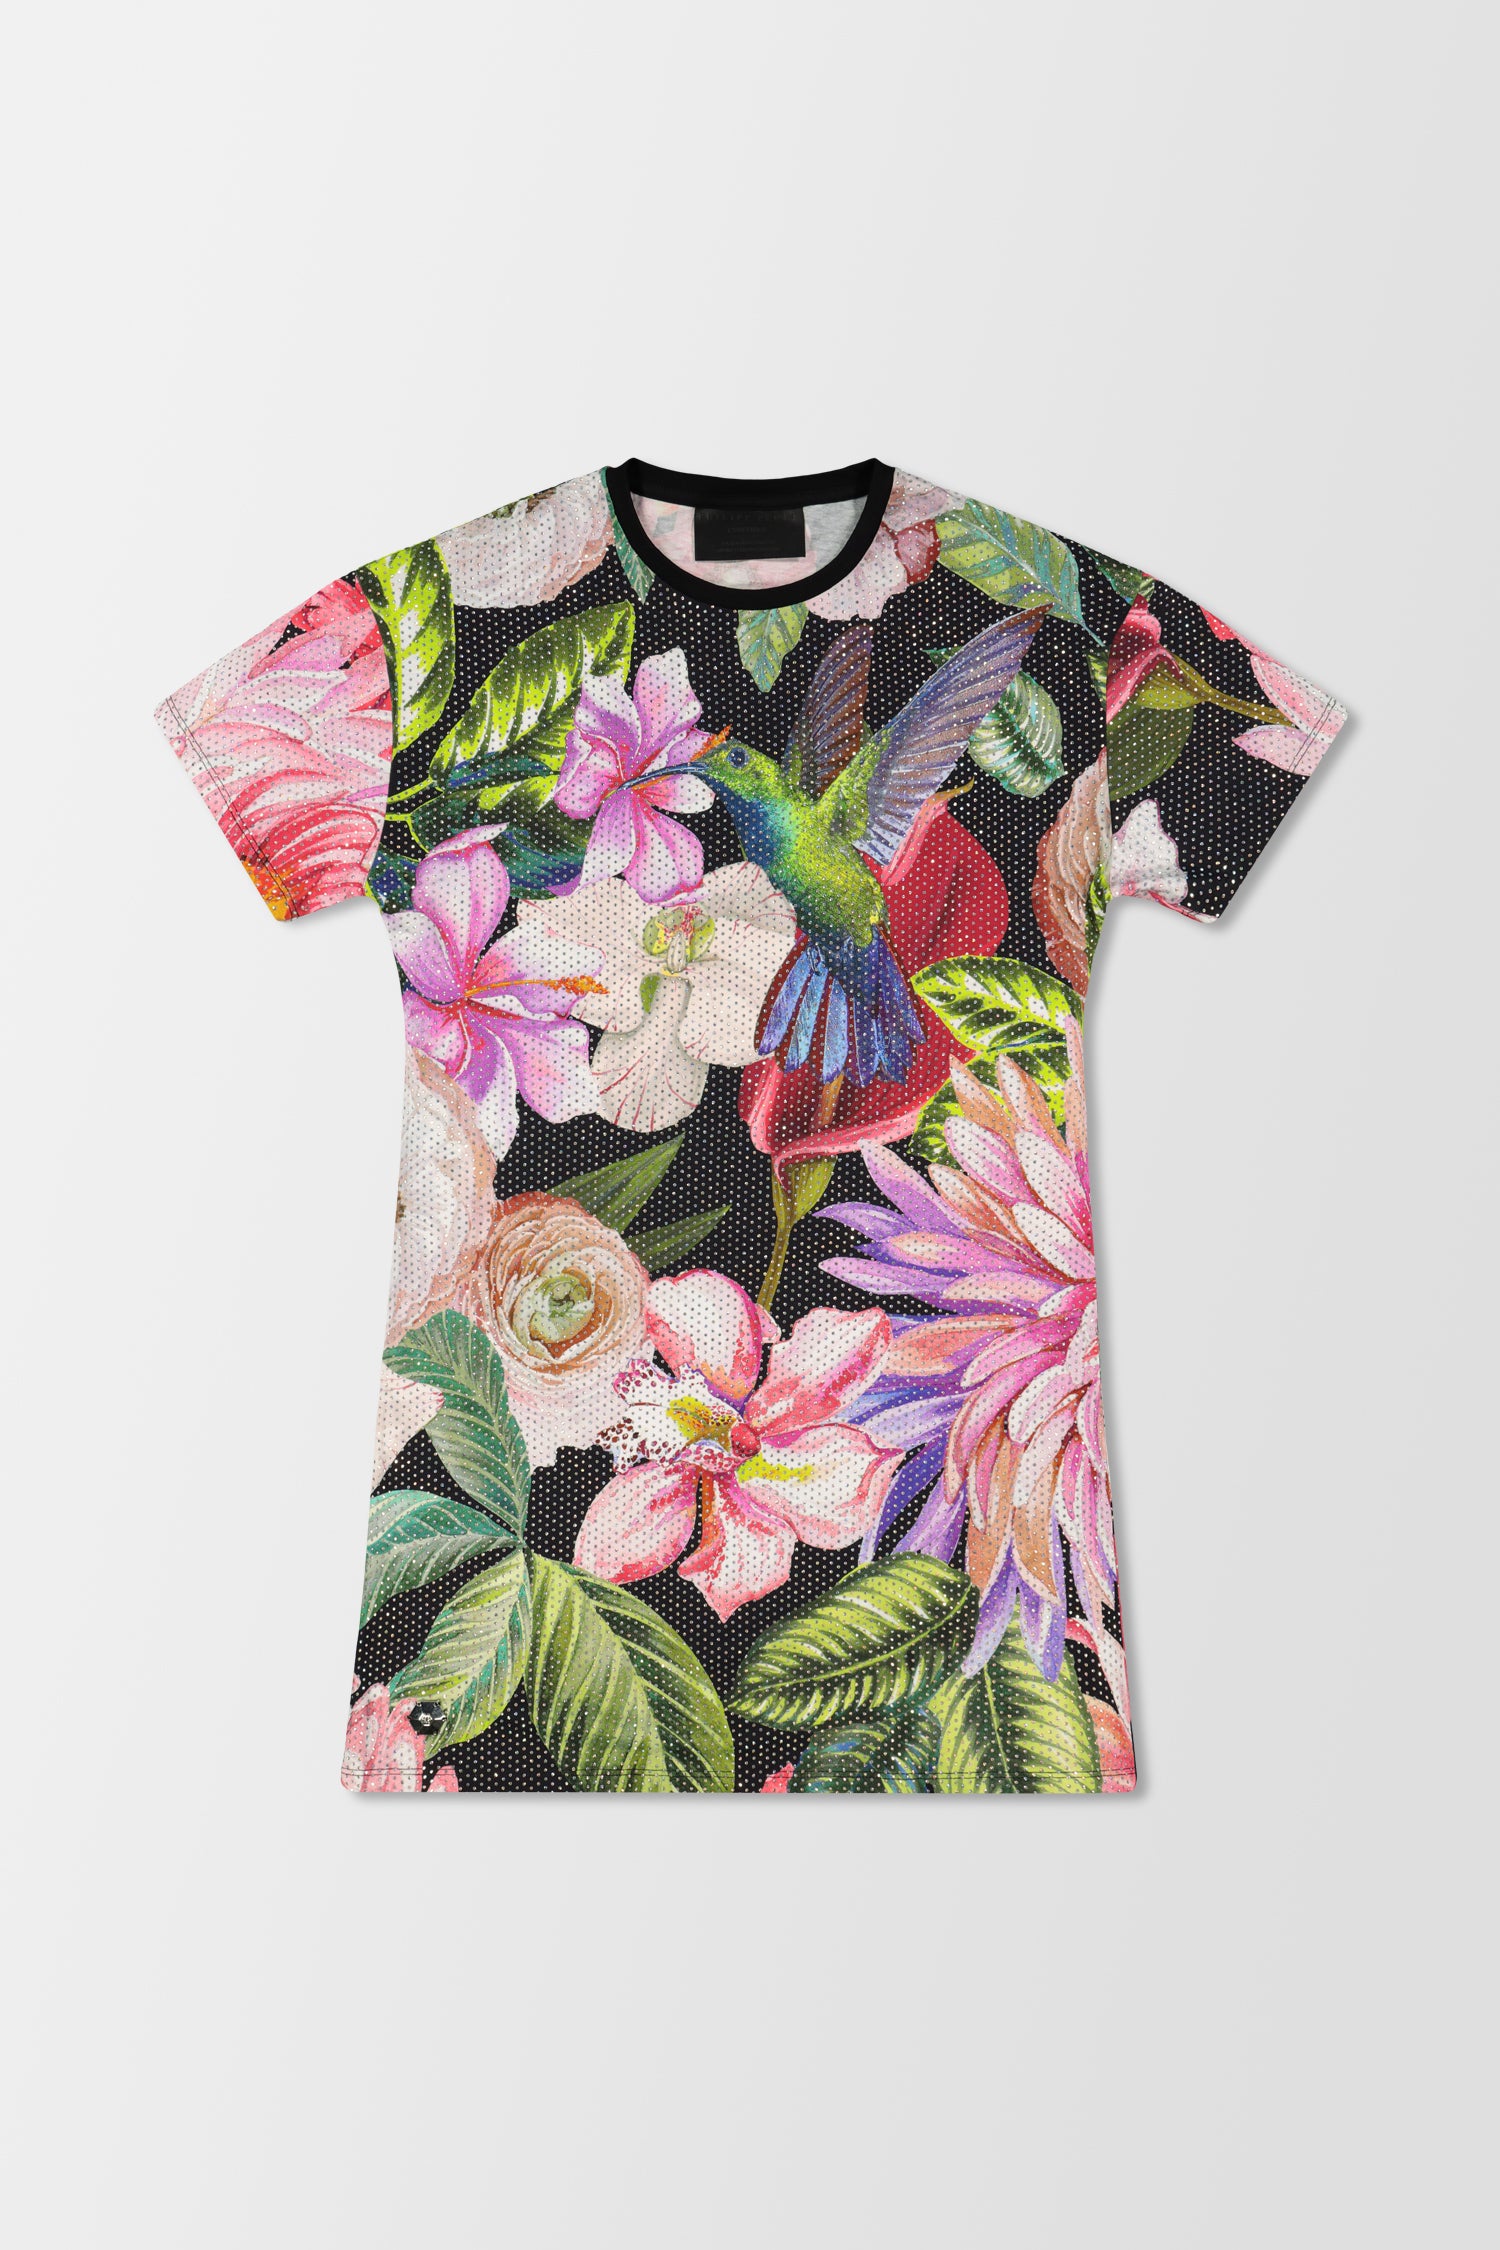 Philipp Plein Black Flowers T-Shirt Dress